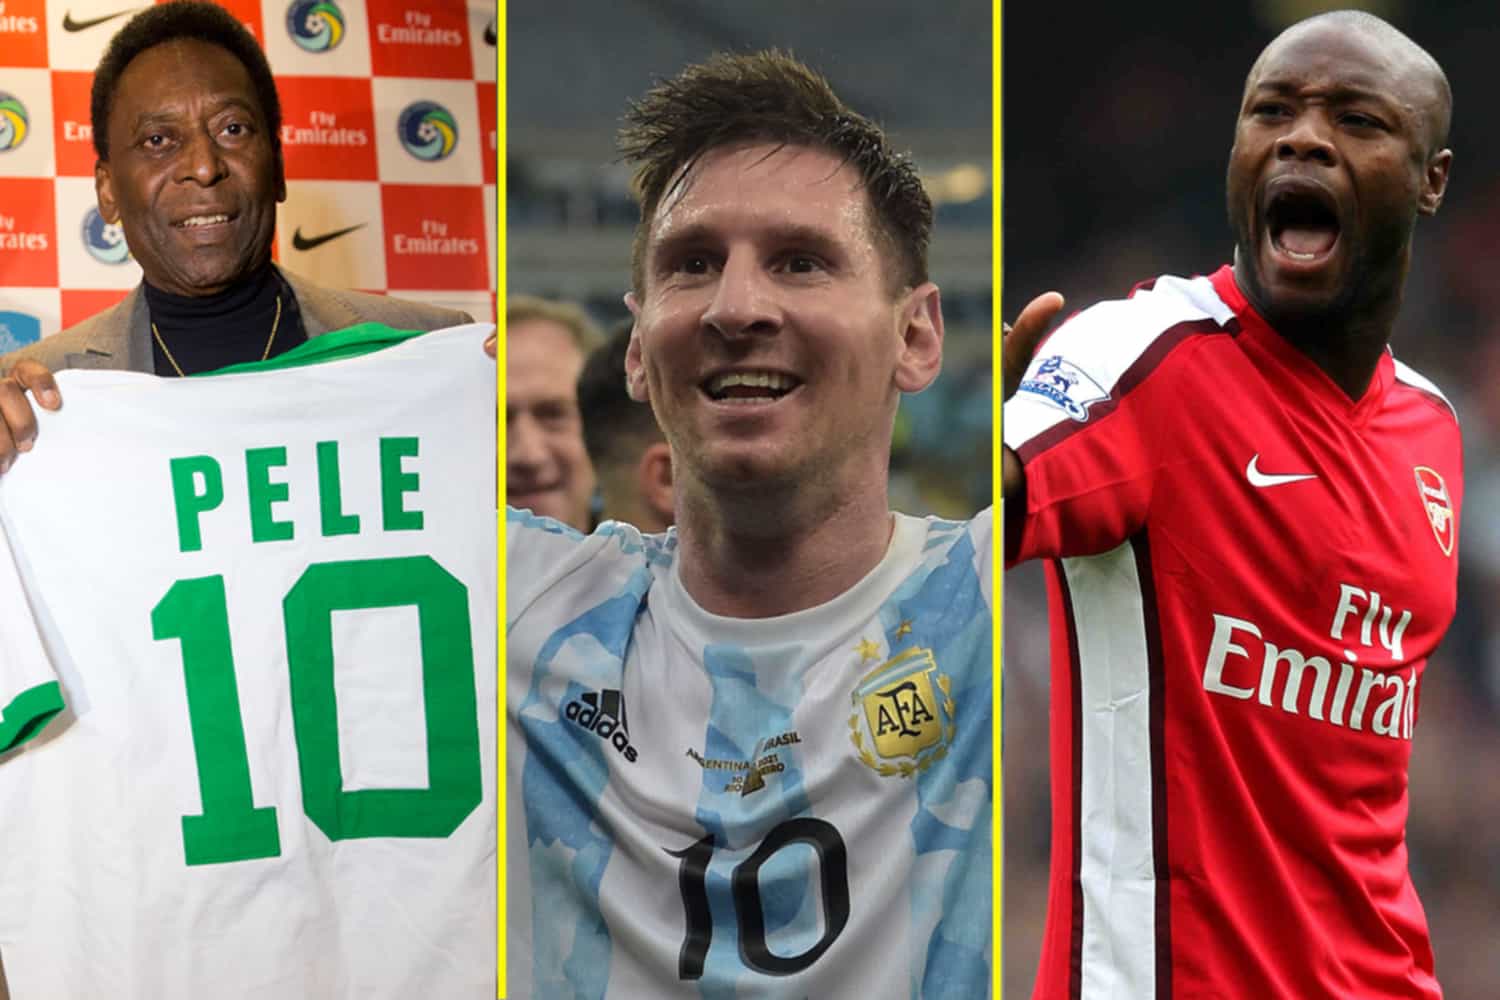 Lionel Messi, Ronaldinho, Diego Maradona, Pele… William Gallas?! Darren Bent says Arsenal defender taking no.10 was ‘disrespectful’ after Andy Carroll’s no.2 shirt at Reading prompts debate